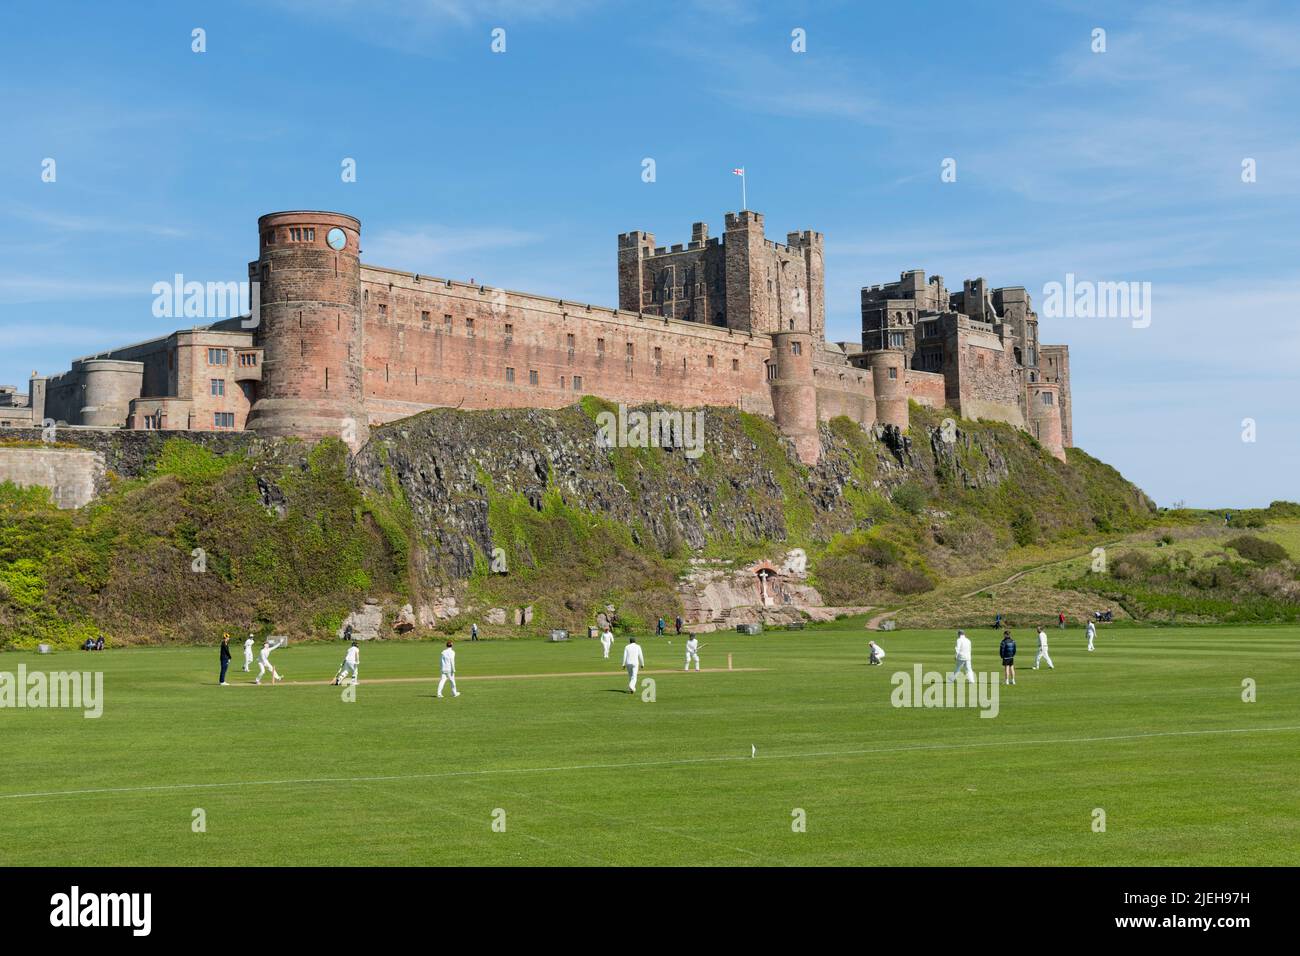 Village cricket match at Bamburgh, Northumberland, England Stock Photo